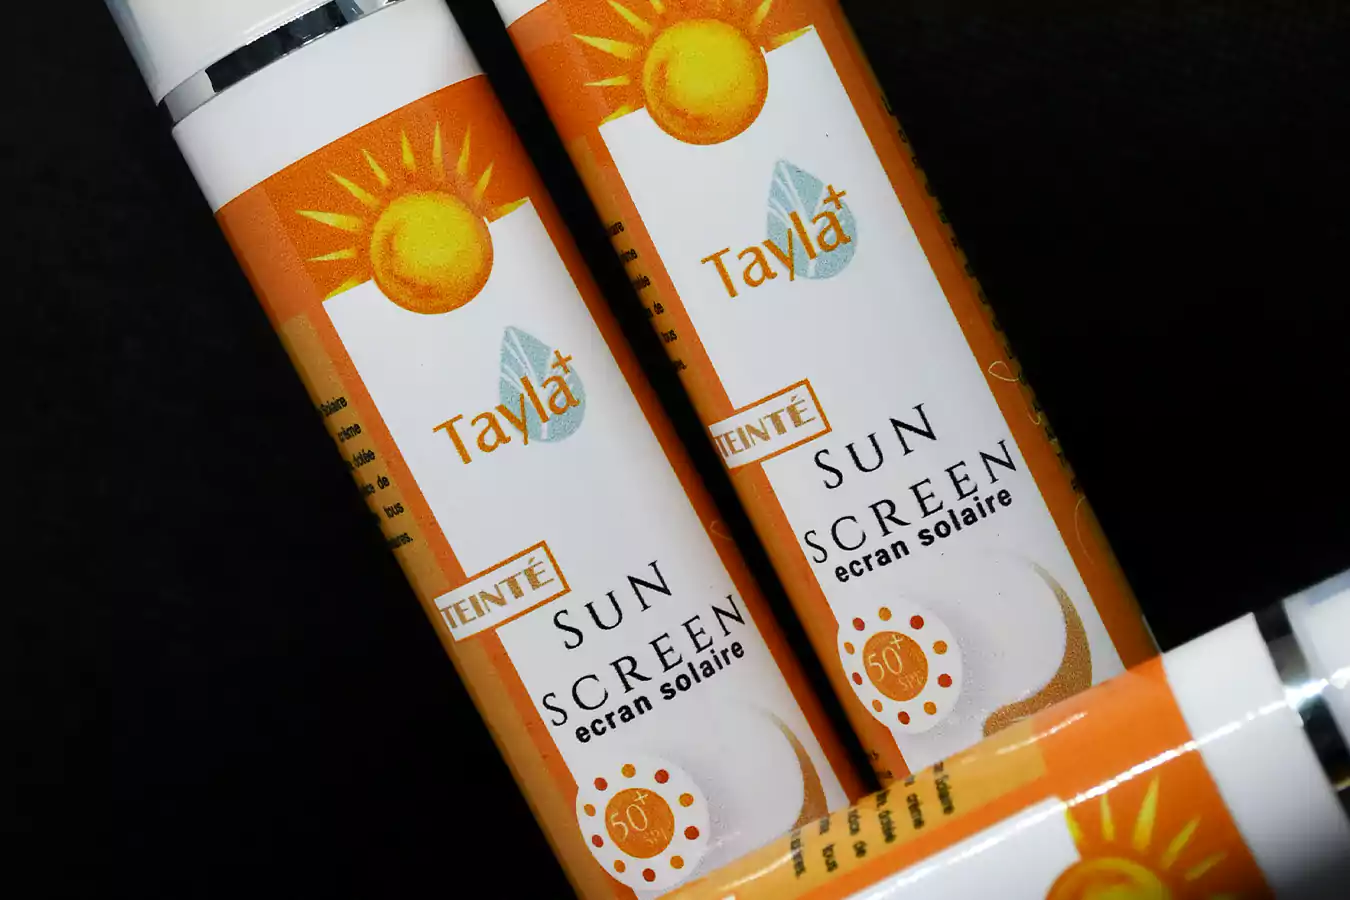 Sun-Screen-ecran-solaire-Tayla-plus-Handmzde-Tunisie-etnafes-3-655a5f12c73a2